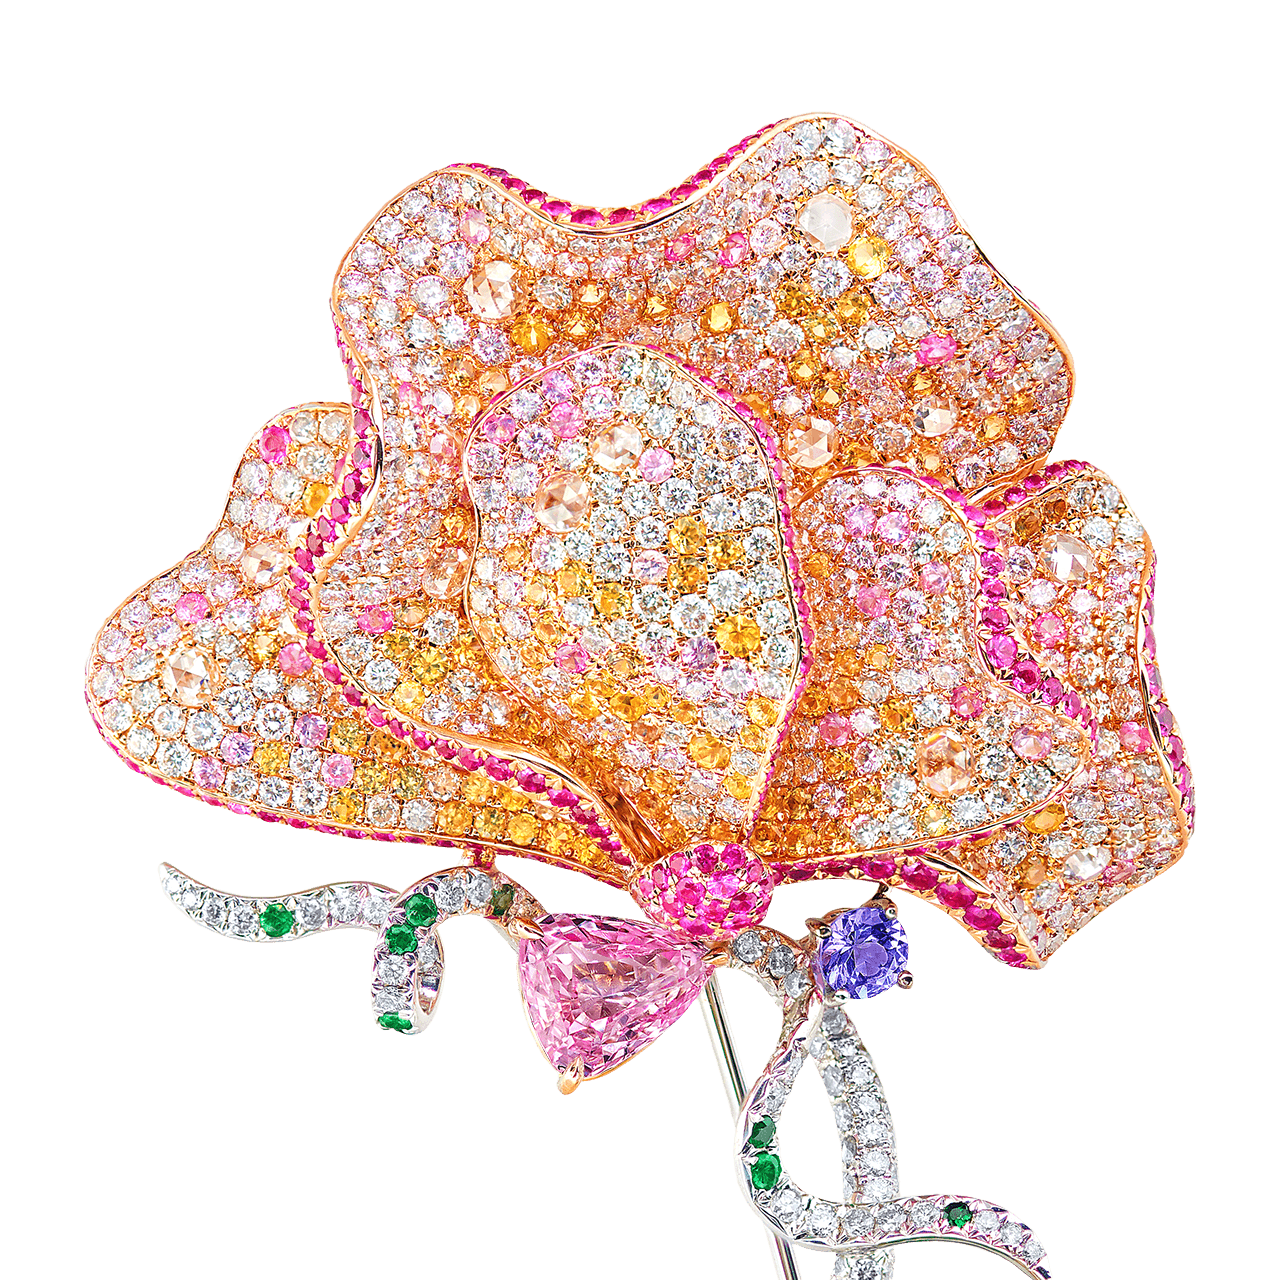 5.09CT沙弗萊 蝴蝶花造型鑽石胸針
Tsavorite, Multi - Colored Gemstone and Diamond Brooch